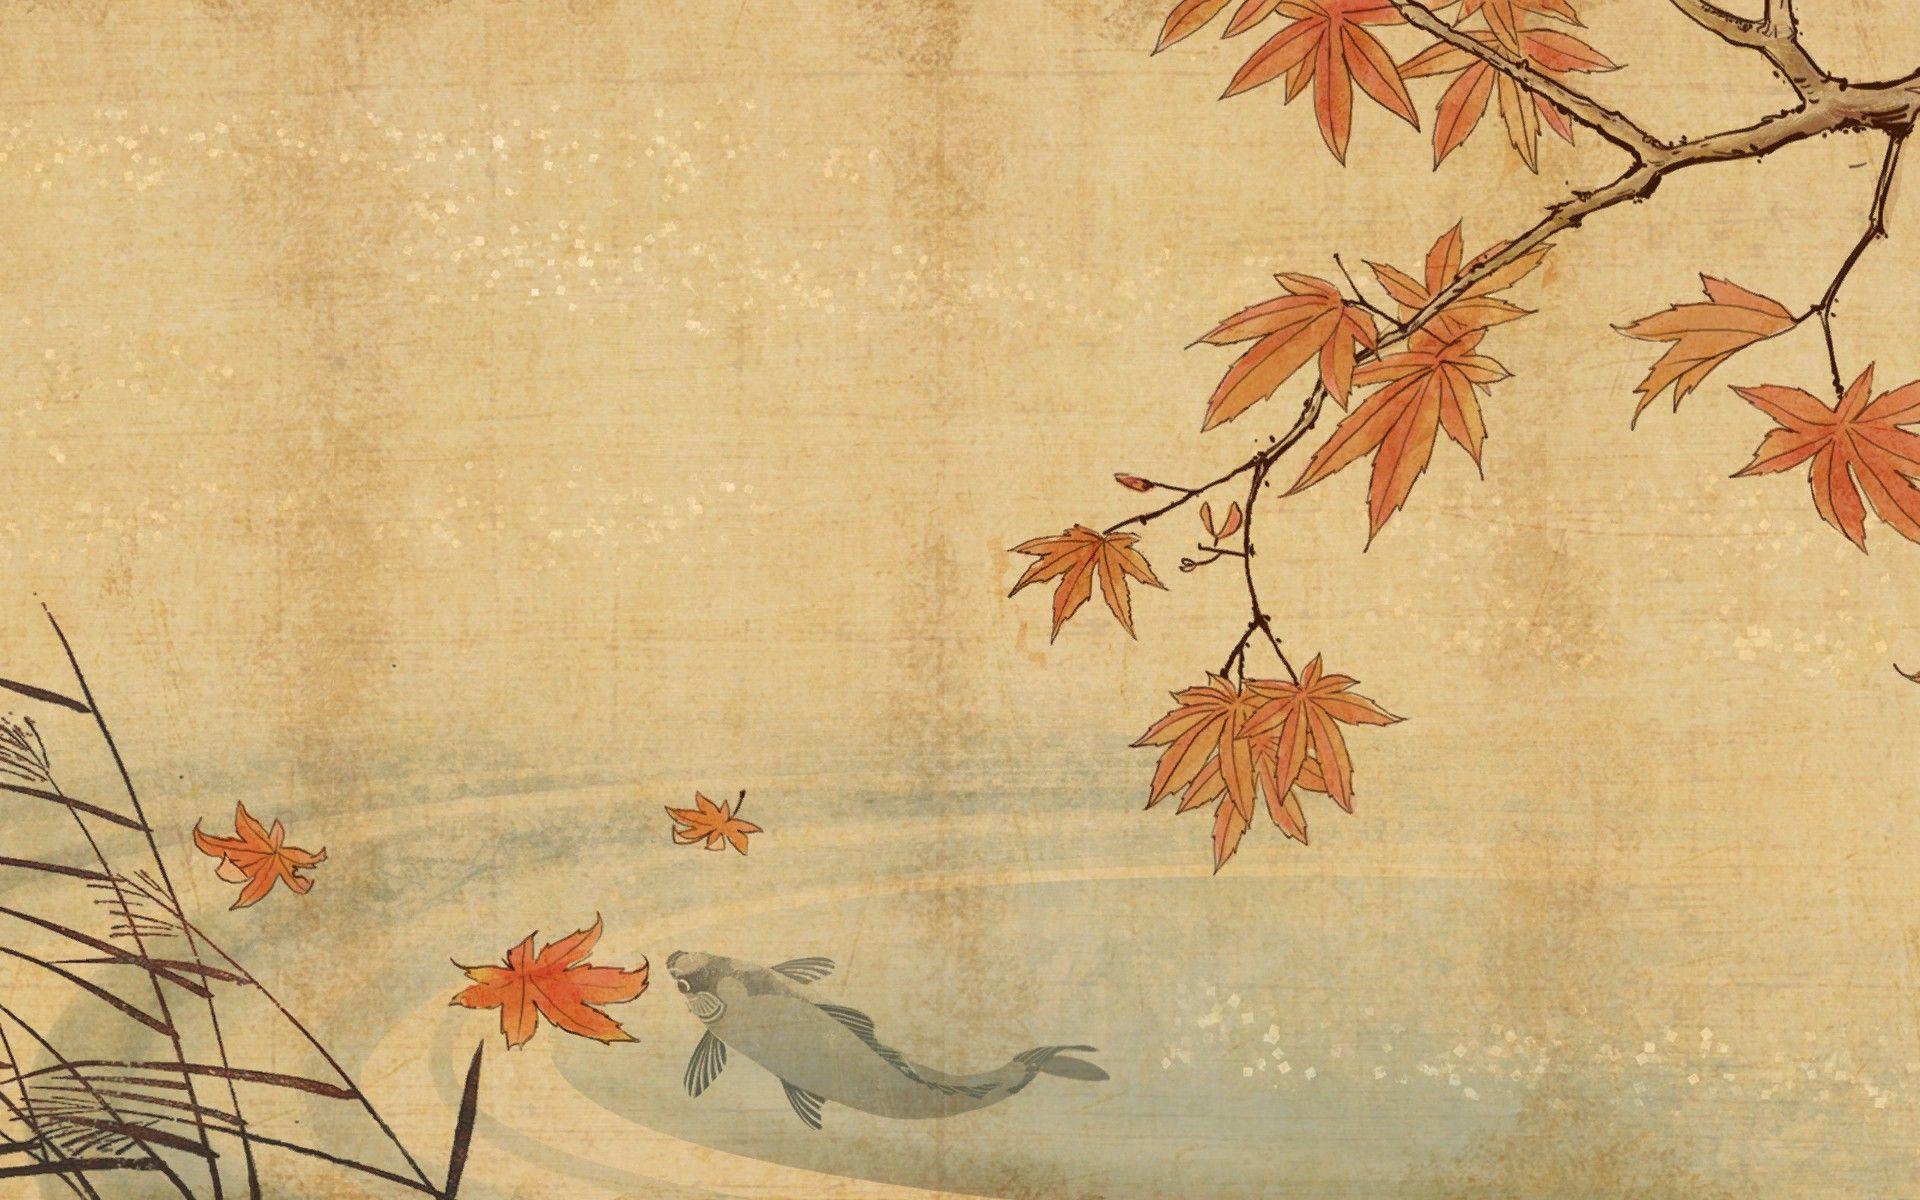 Japanese Zen Garden Wallpaper, Image Collection of Japanese